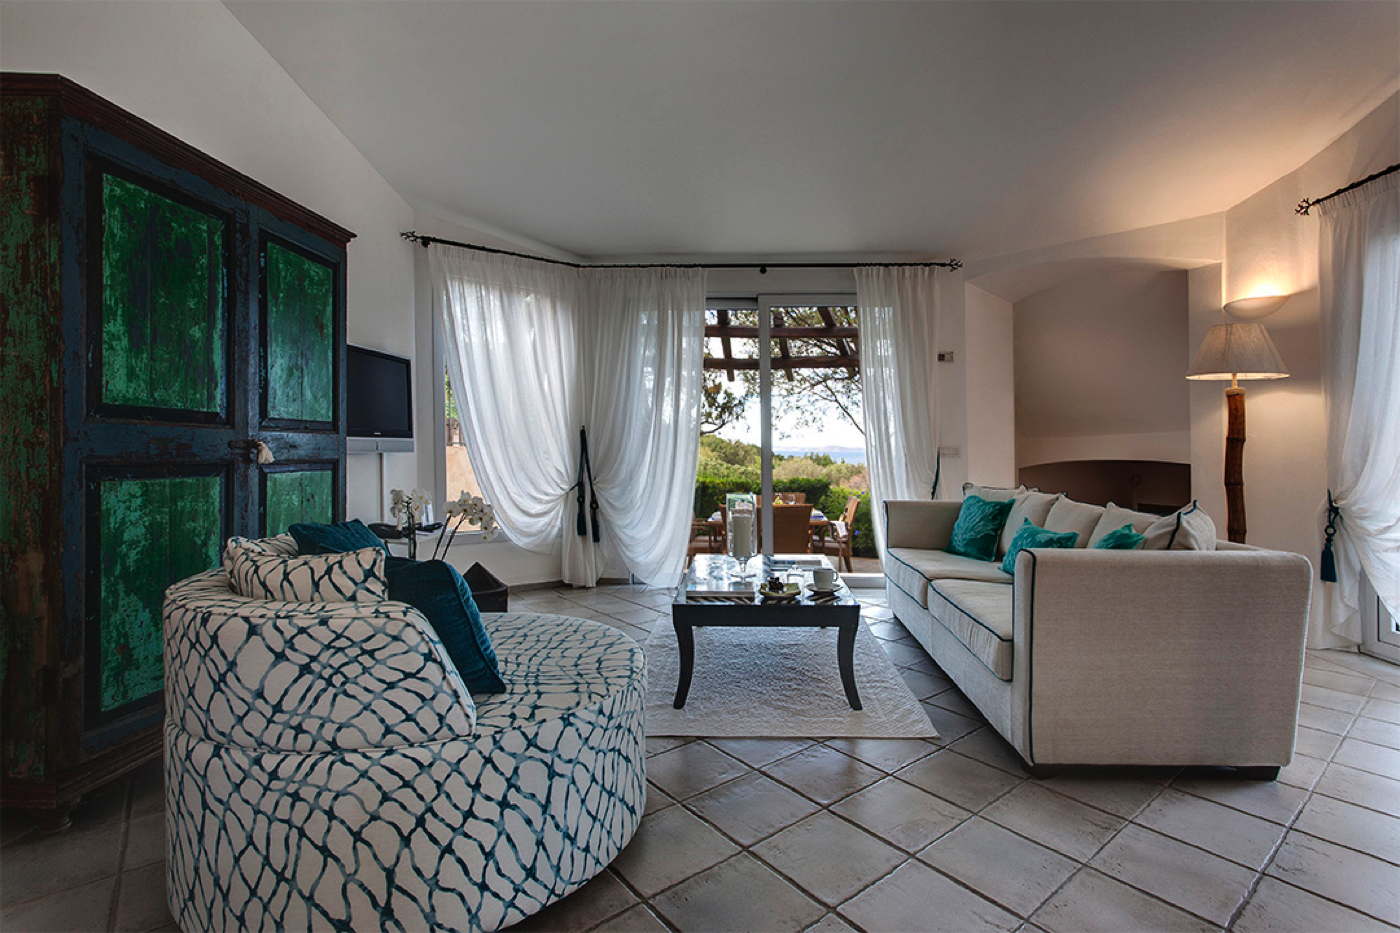 Ferienhaus–Ferienvilla–Villa am Meer–mit Service in Italien-Sardinien-Costa Smeralda-Baja Sardinia